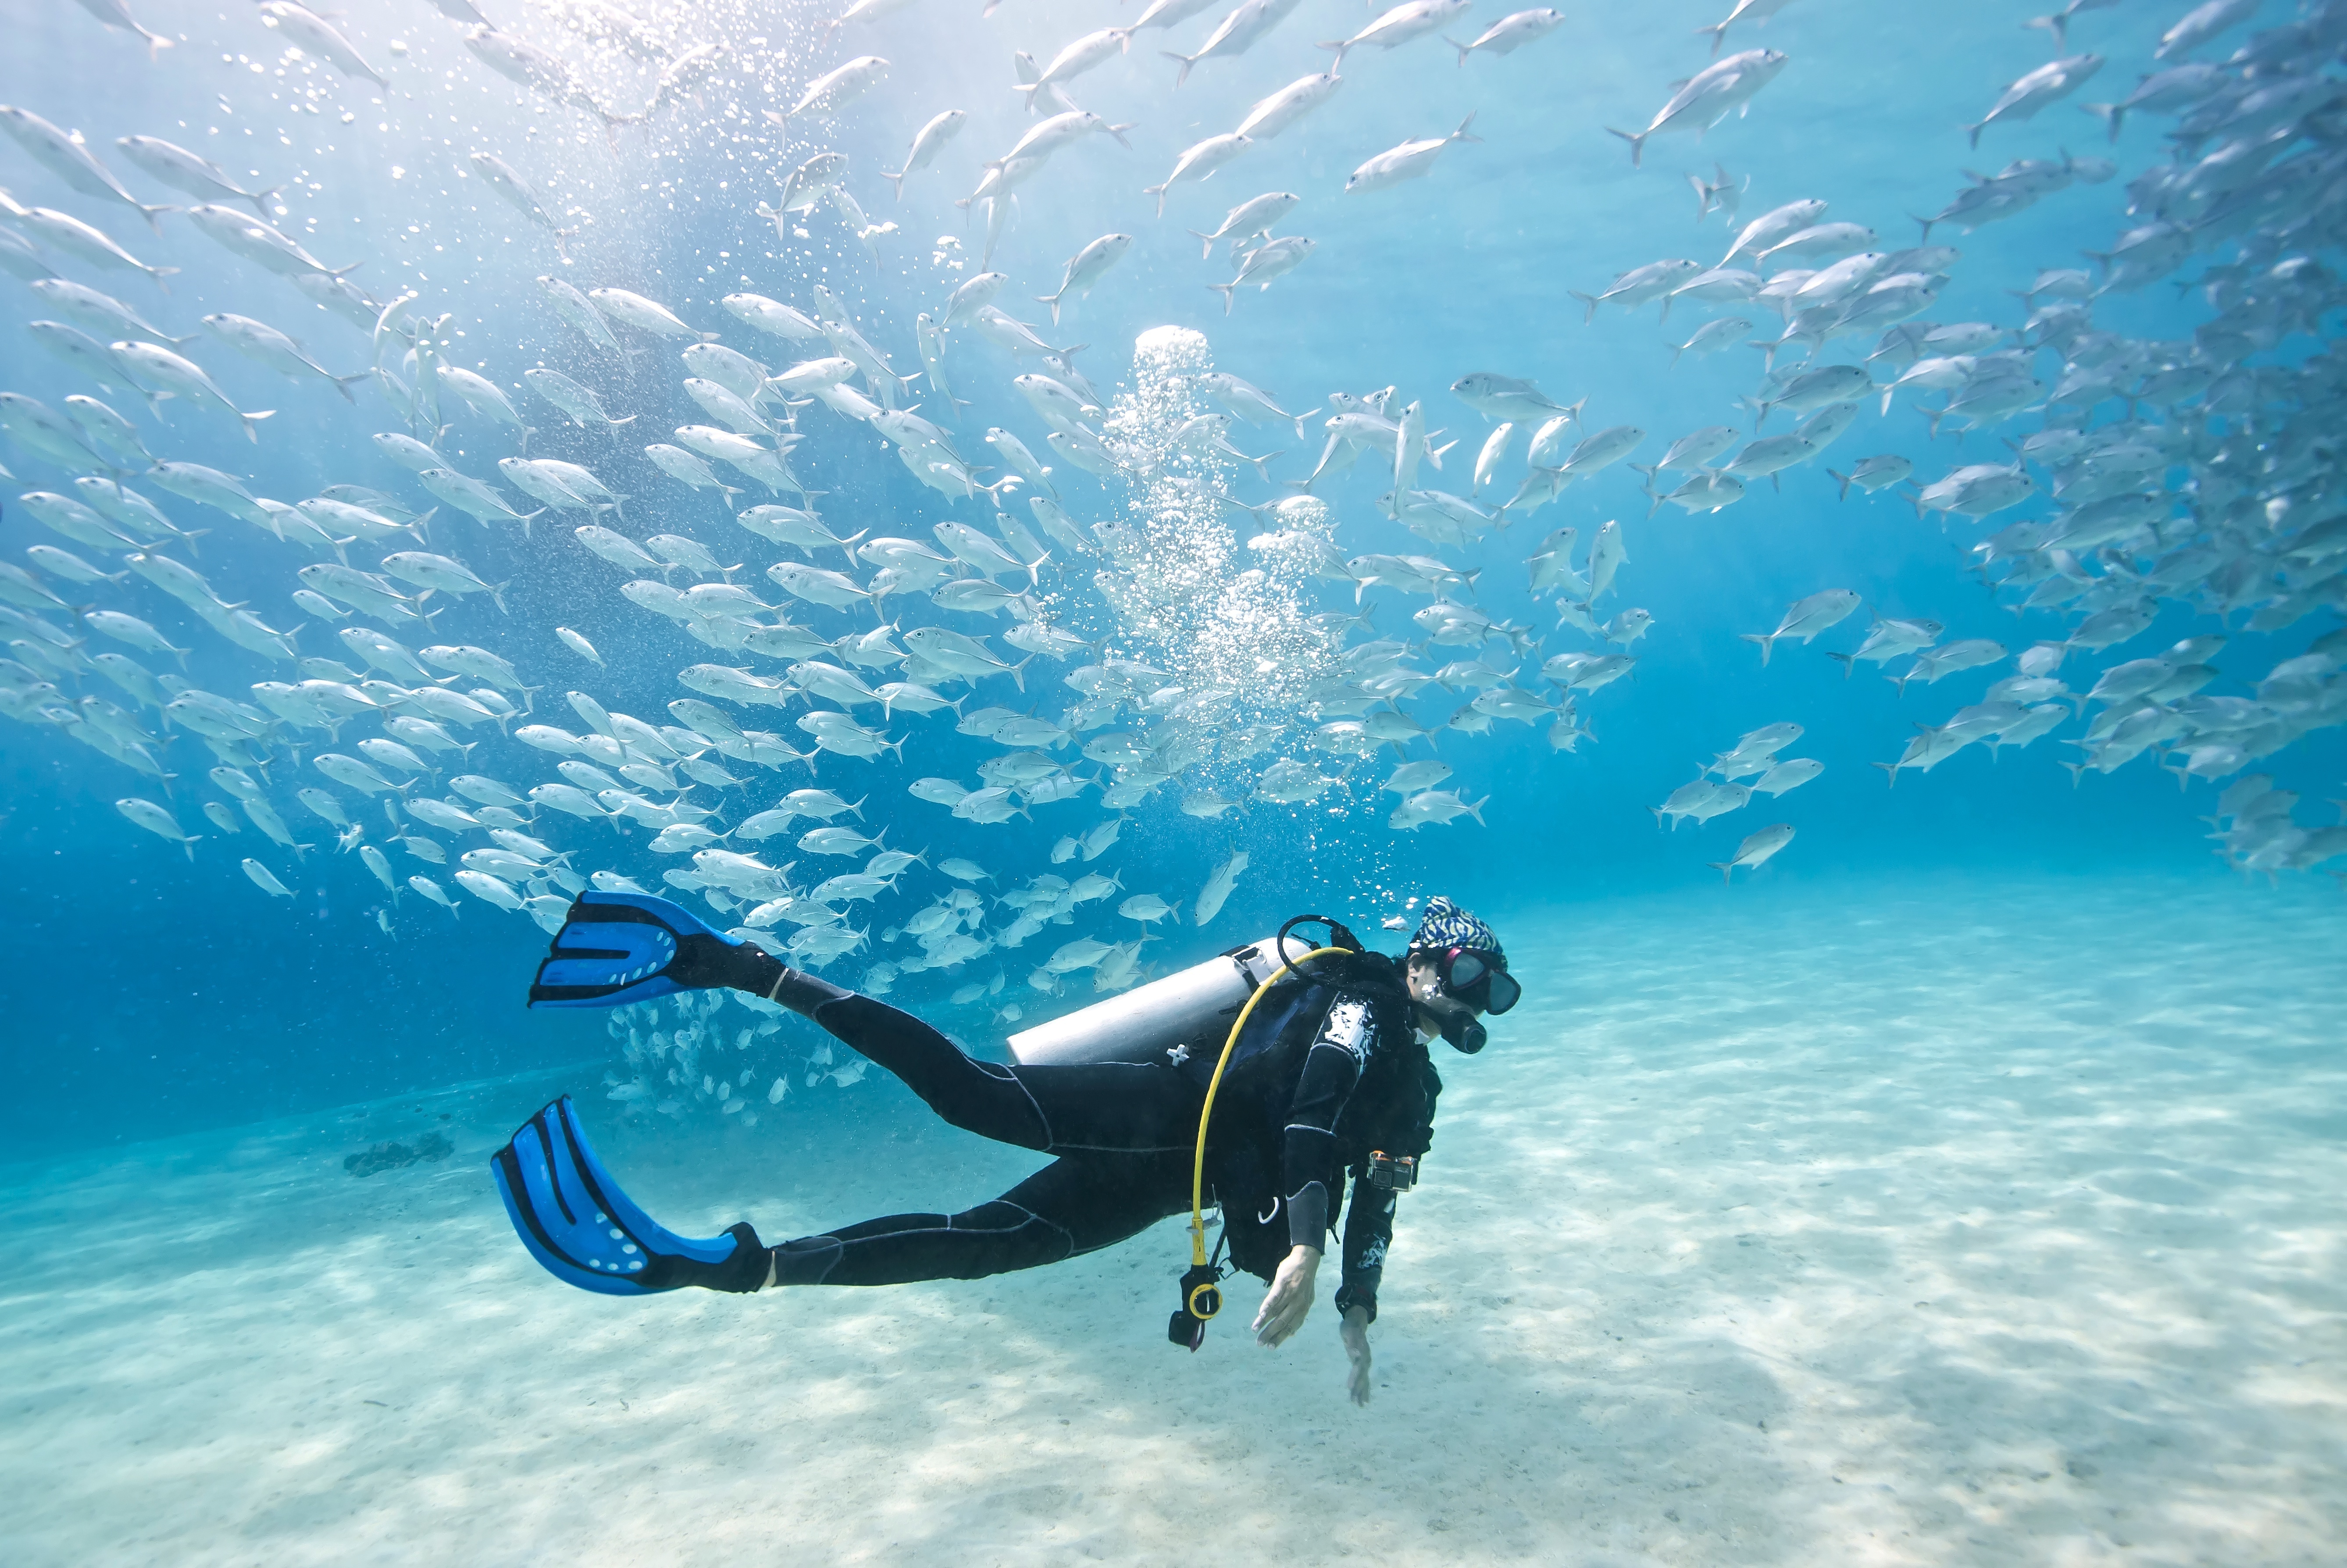 Dive! Dive! Dive! - Discover Scuba Diving on the Costa Blanca